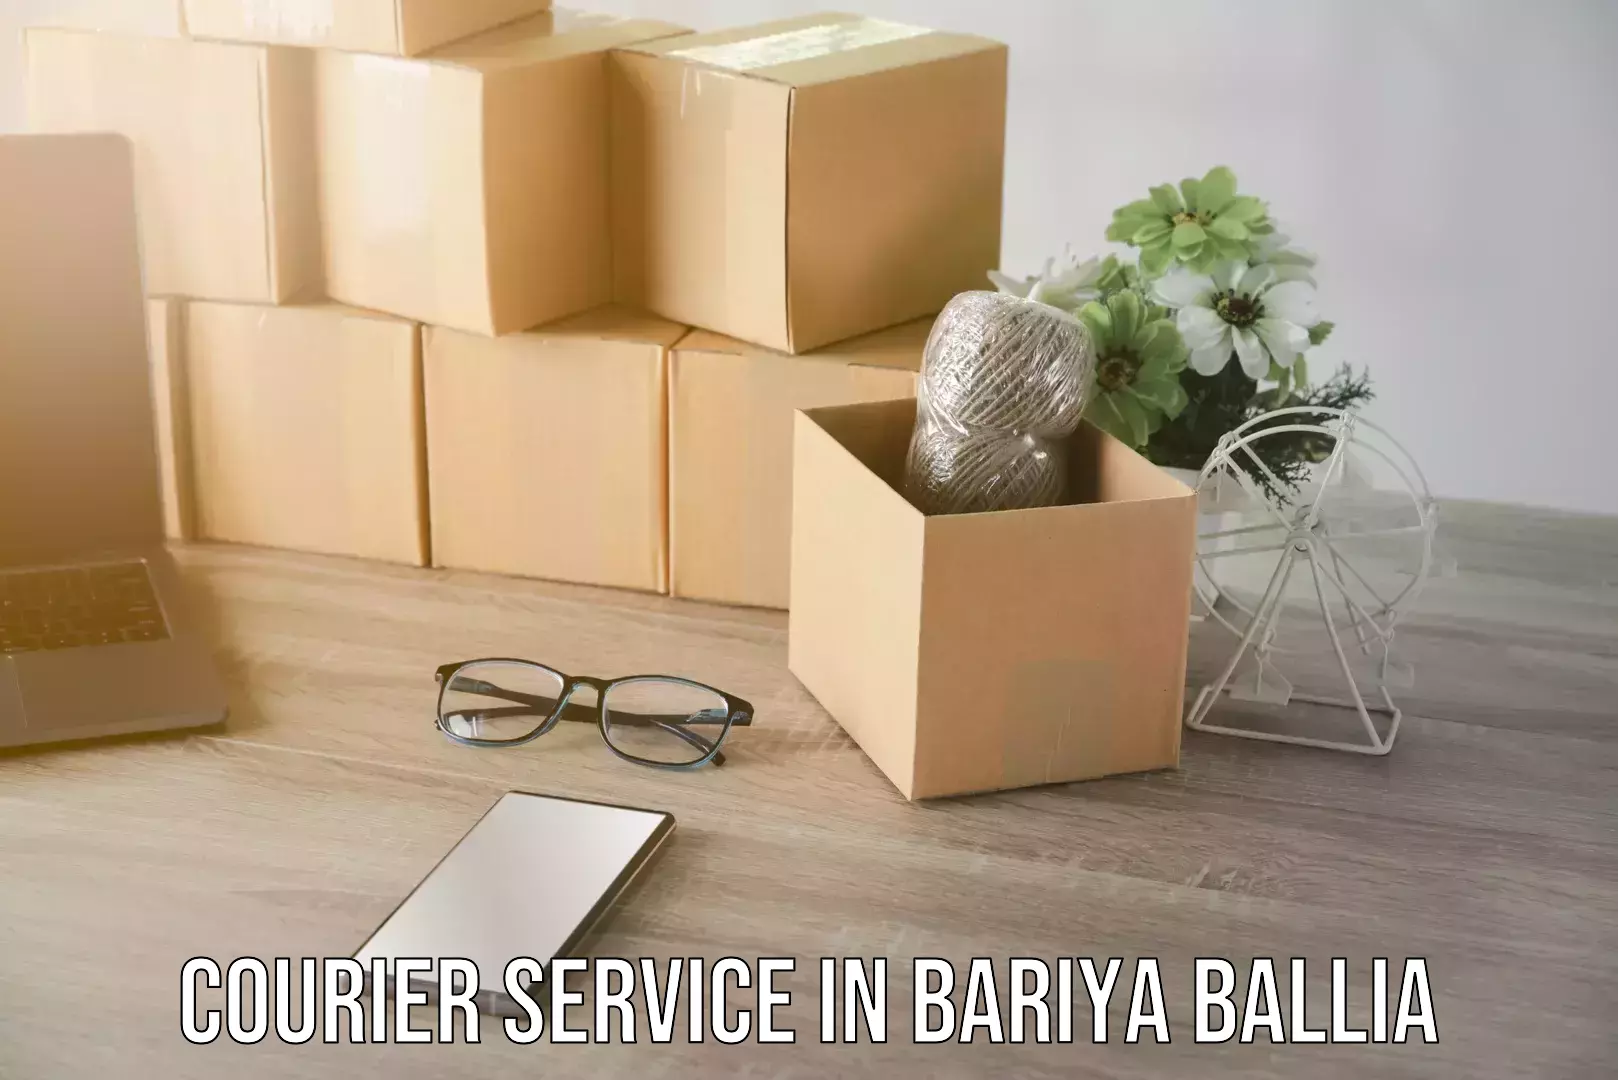 Efficient parcel service in Bariya Ballia